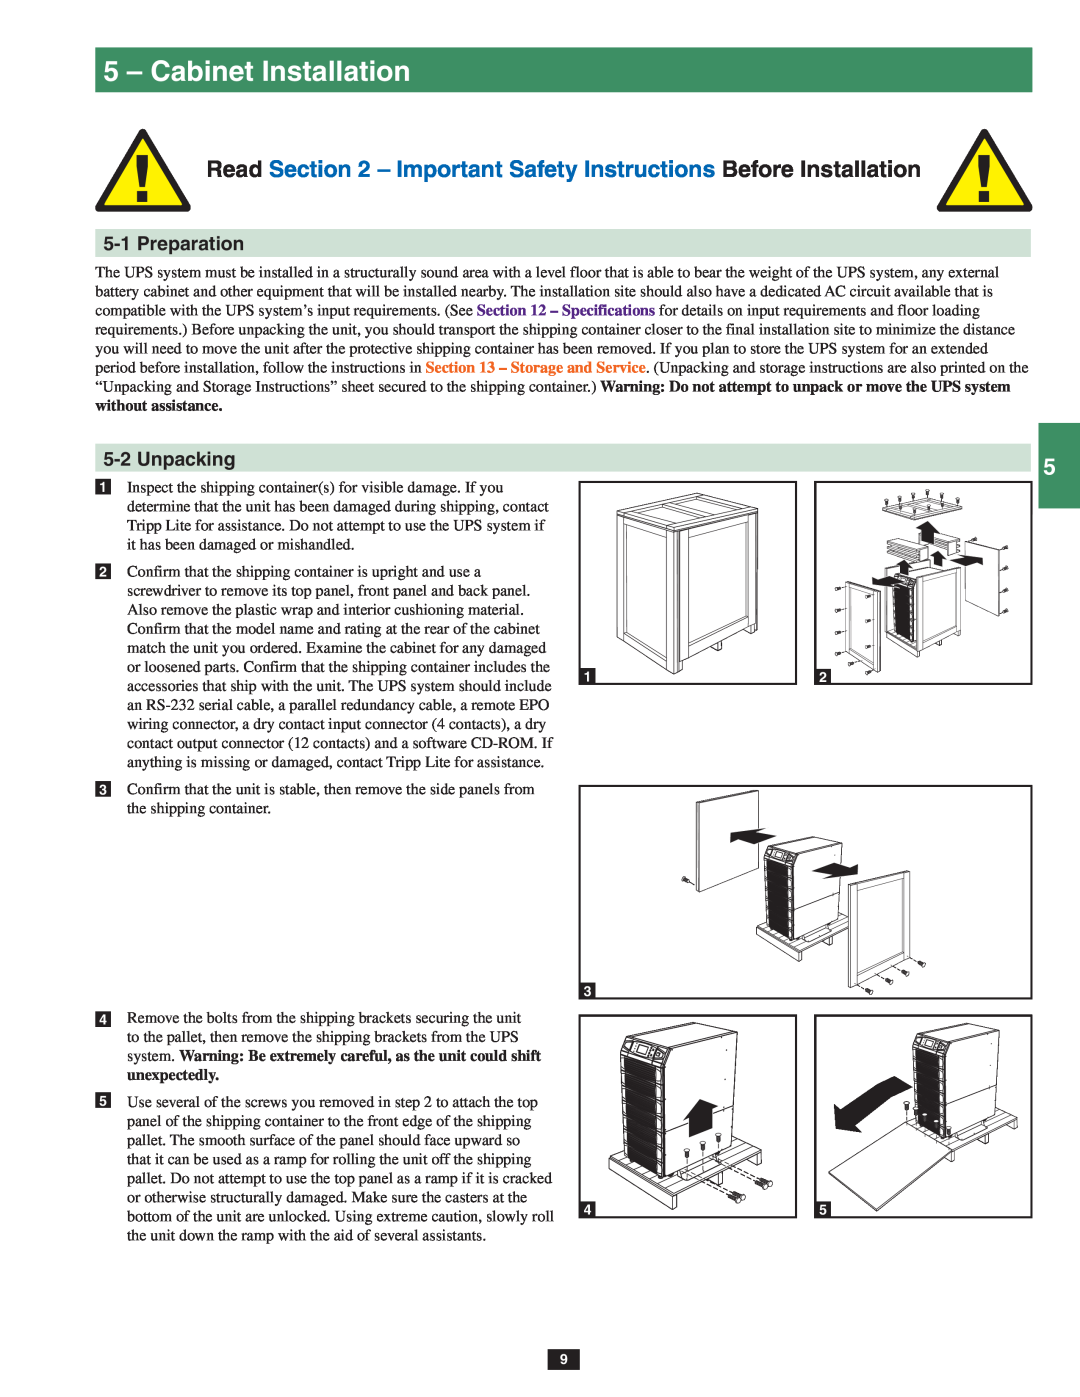 Tripp Lite SU80KX Cabinet Installation, Preparation, Unpacking, Read - Important Safety Instructions Before Installation 